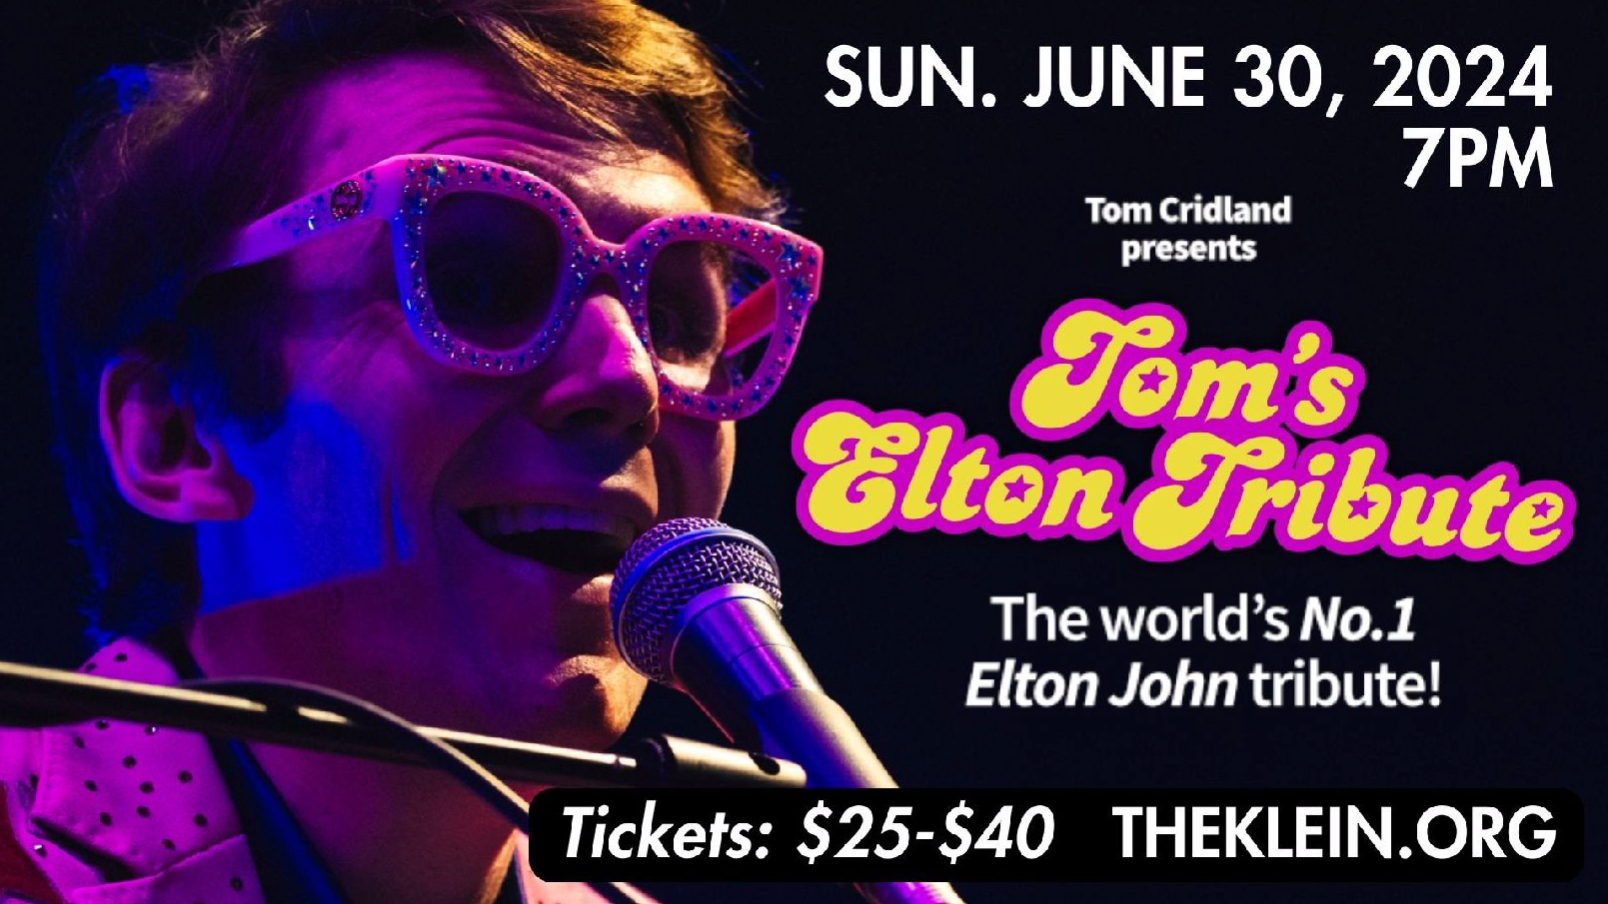 Tom’s Elton Tribute